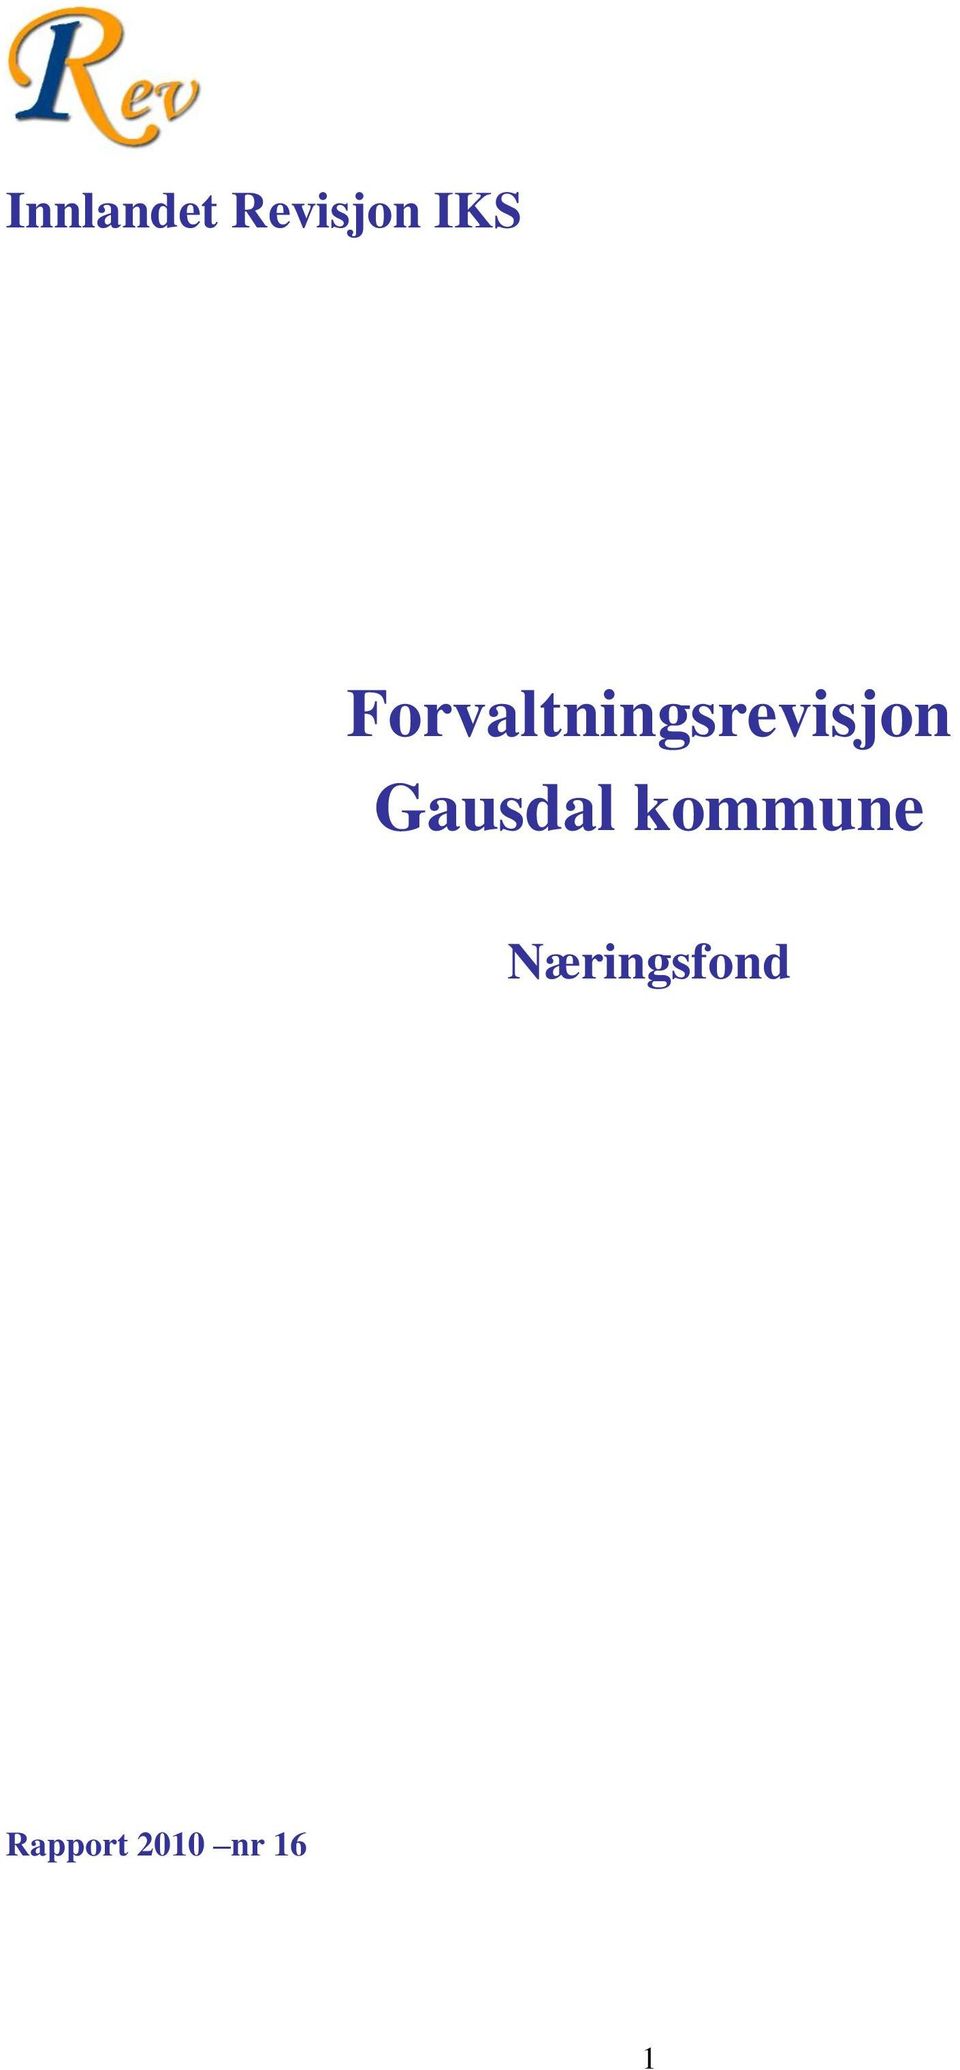 Forvaltningsrevisjon Gausdal kommune - PDF Free Download